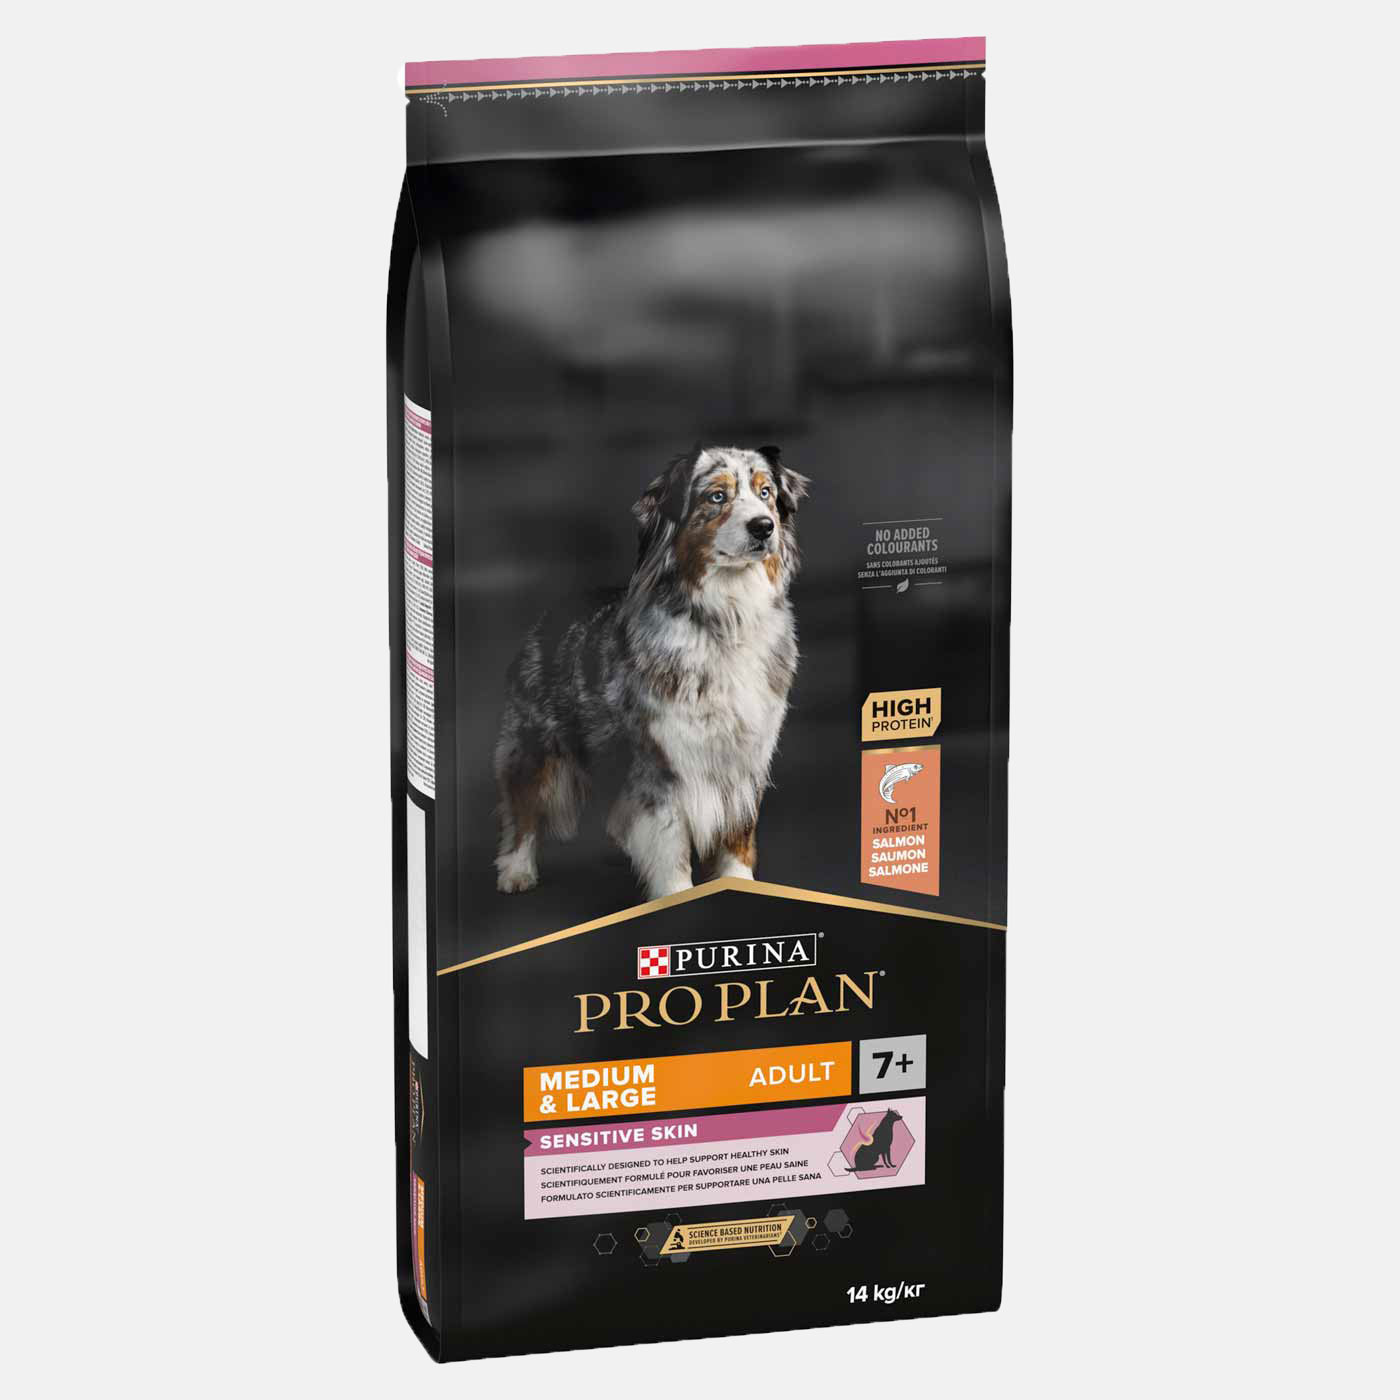 PRO PLAN Medium & Large Adult 7+ Sensitive Skin Dry Dog Food with Salmon